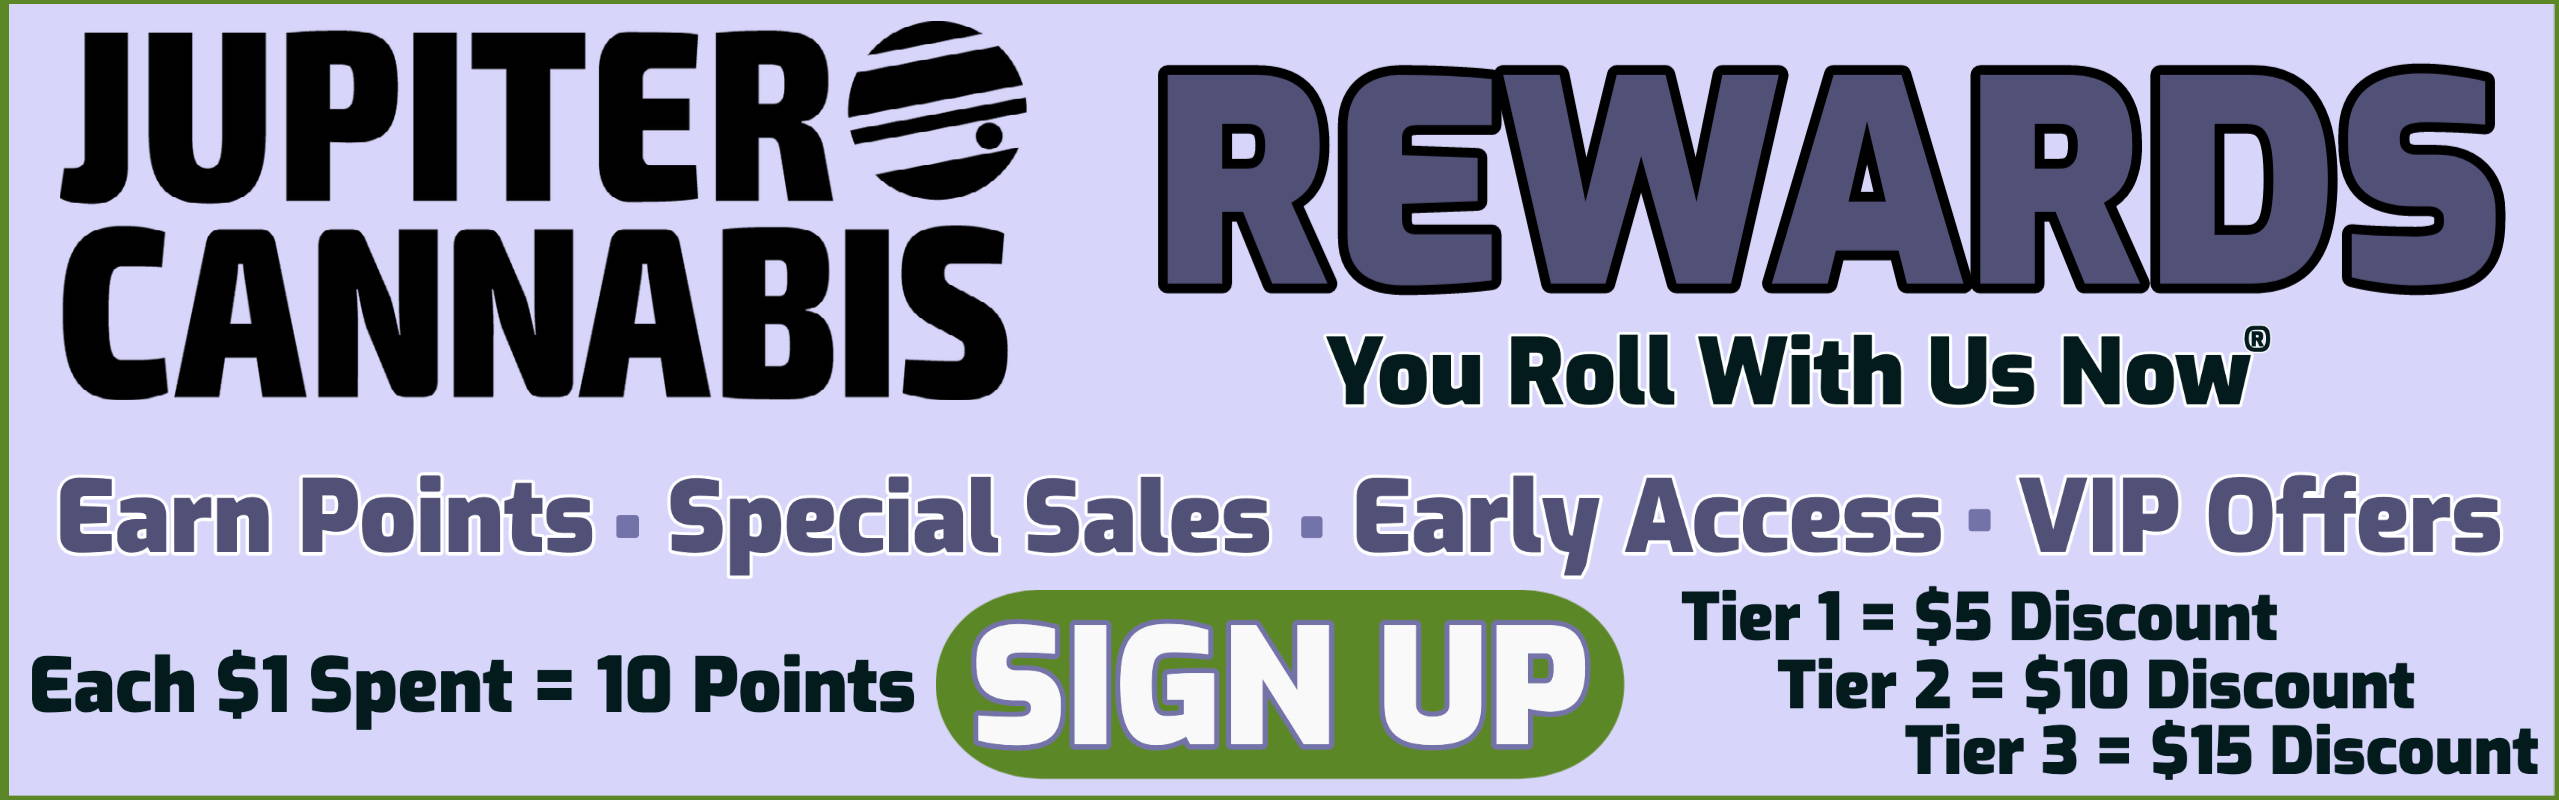 Jupiter Cannabis Rewards Program | Earn Points | Get Rewards | Sales | VIP OffersJupiter Cannabis Rewards Program | Earn Points | Get Rewards | Sales | VIP Offers